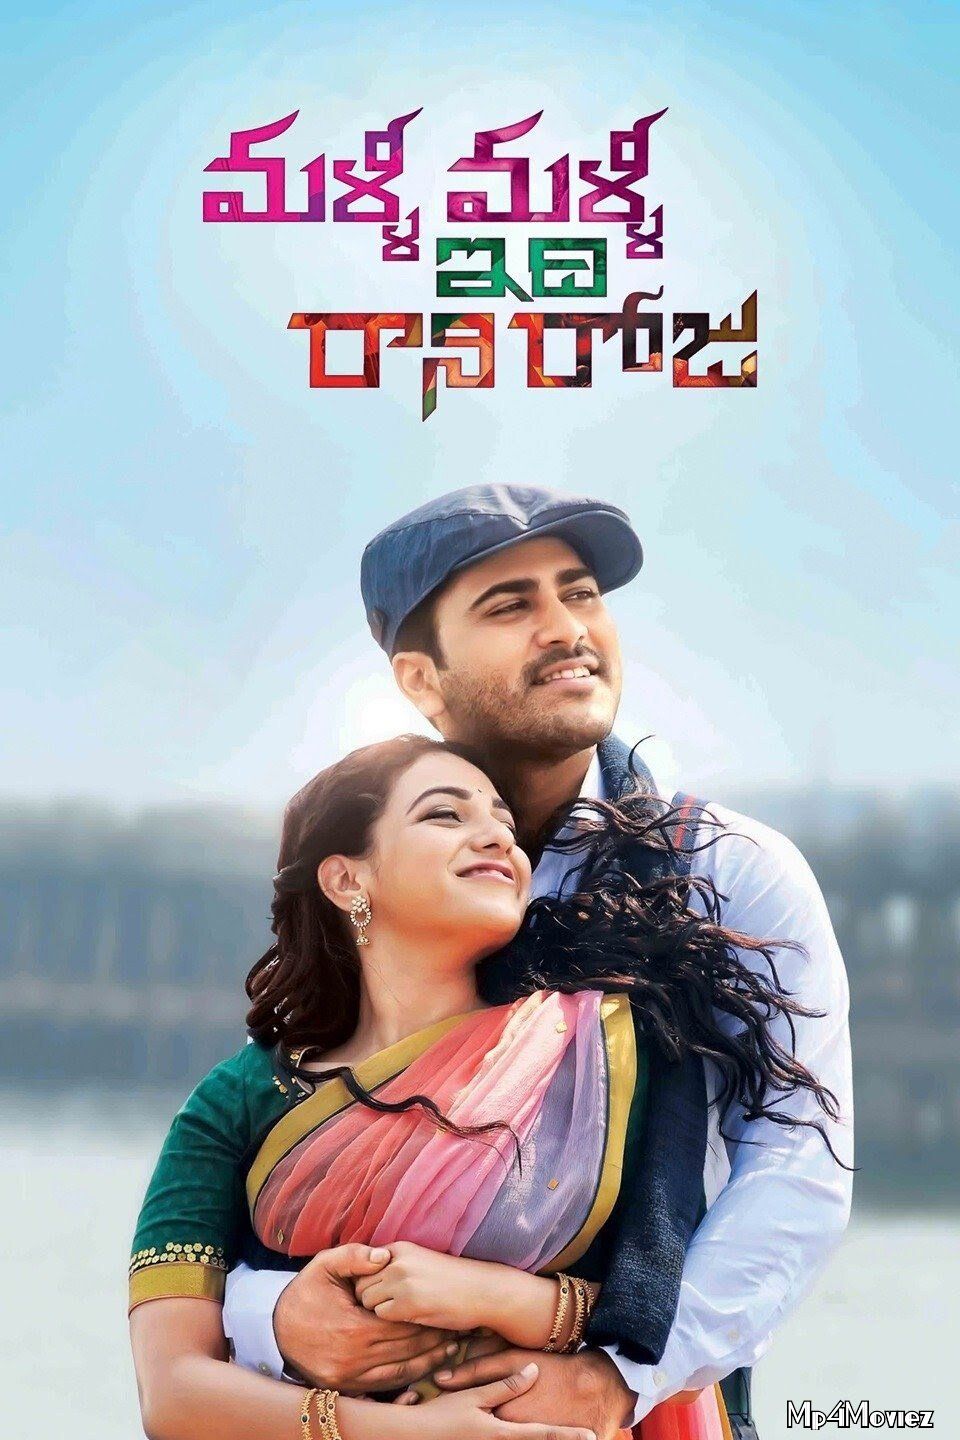 Real Diljala (Malli Malli Idi Rani Roju) 2021 Hindi Dubbed Movie HDRip download full movie